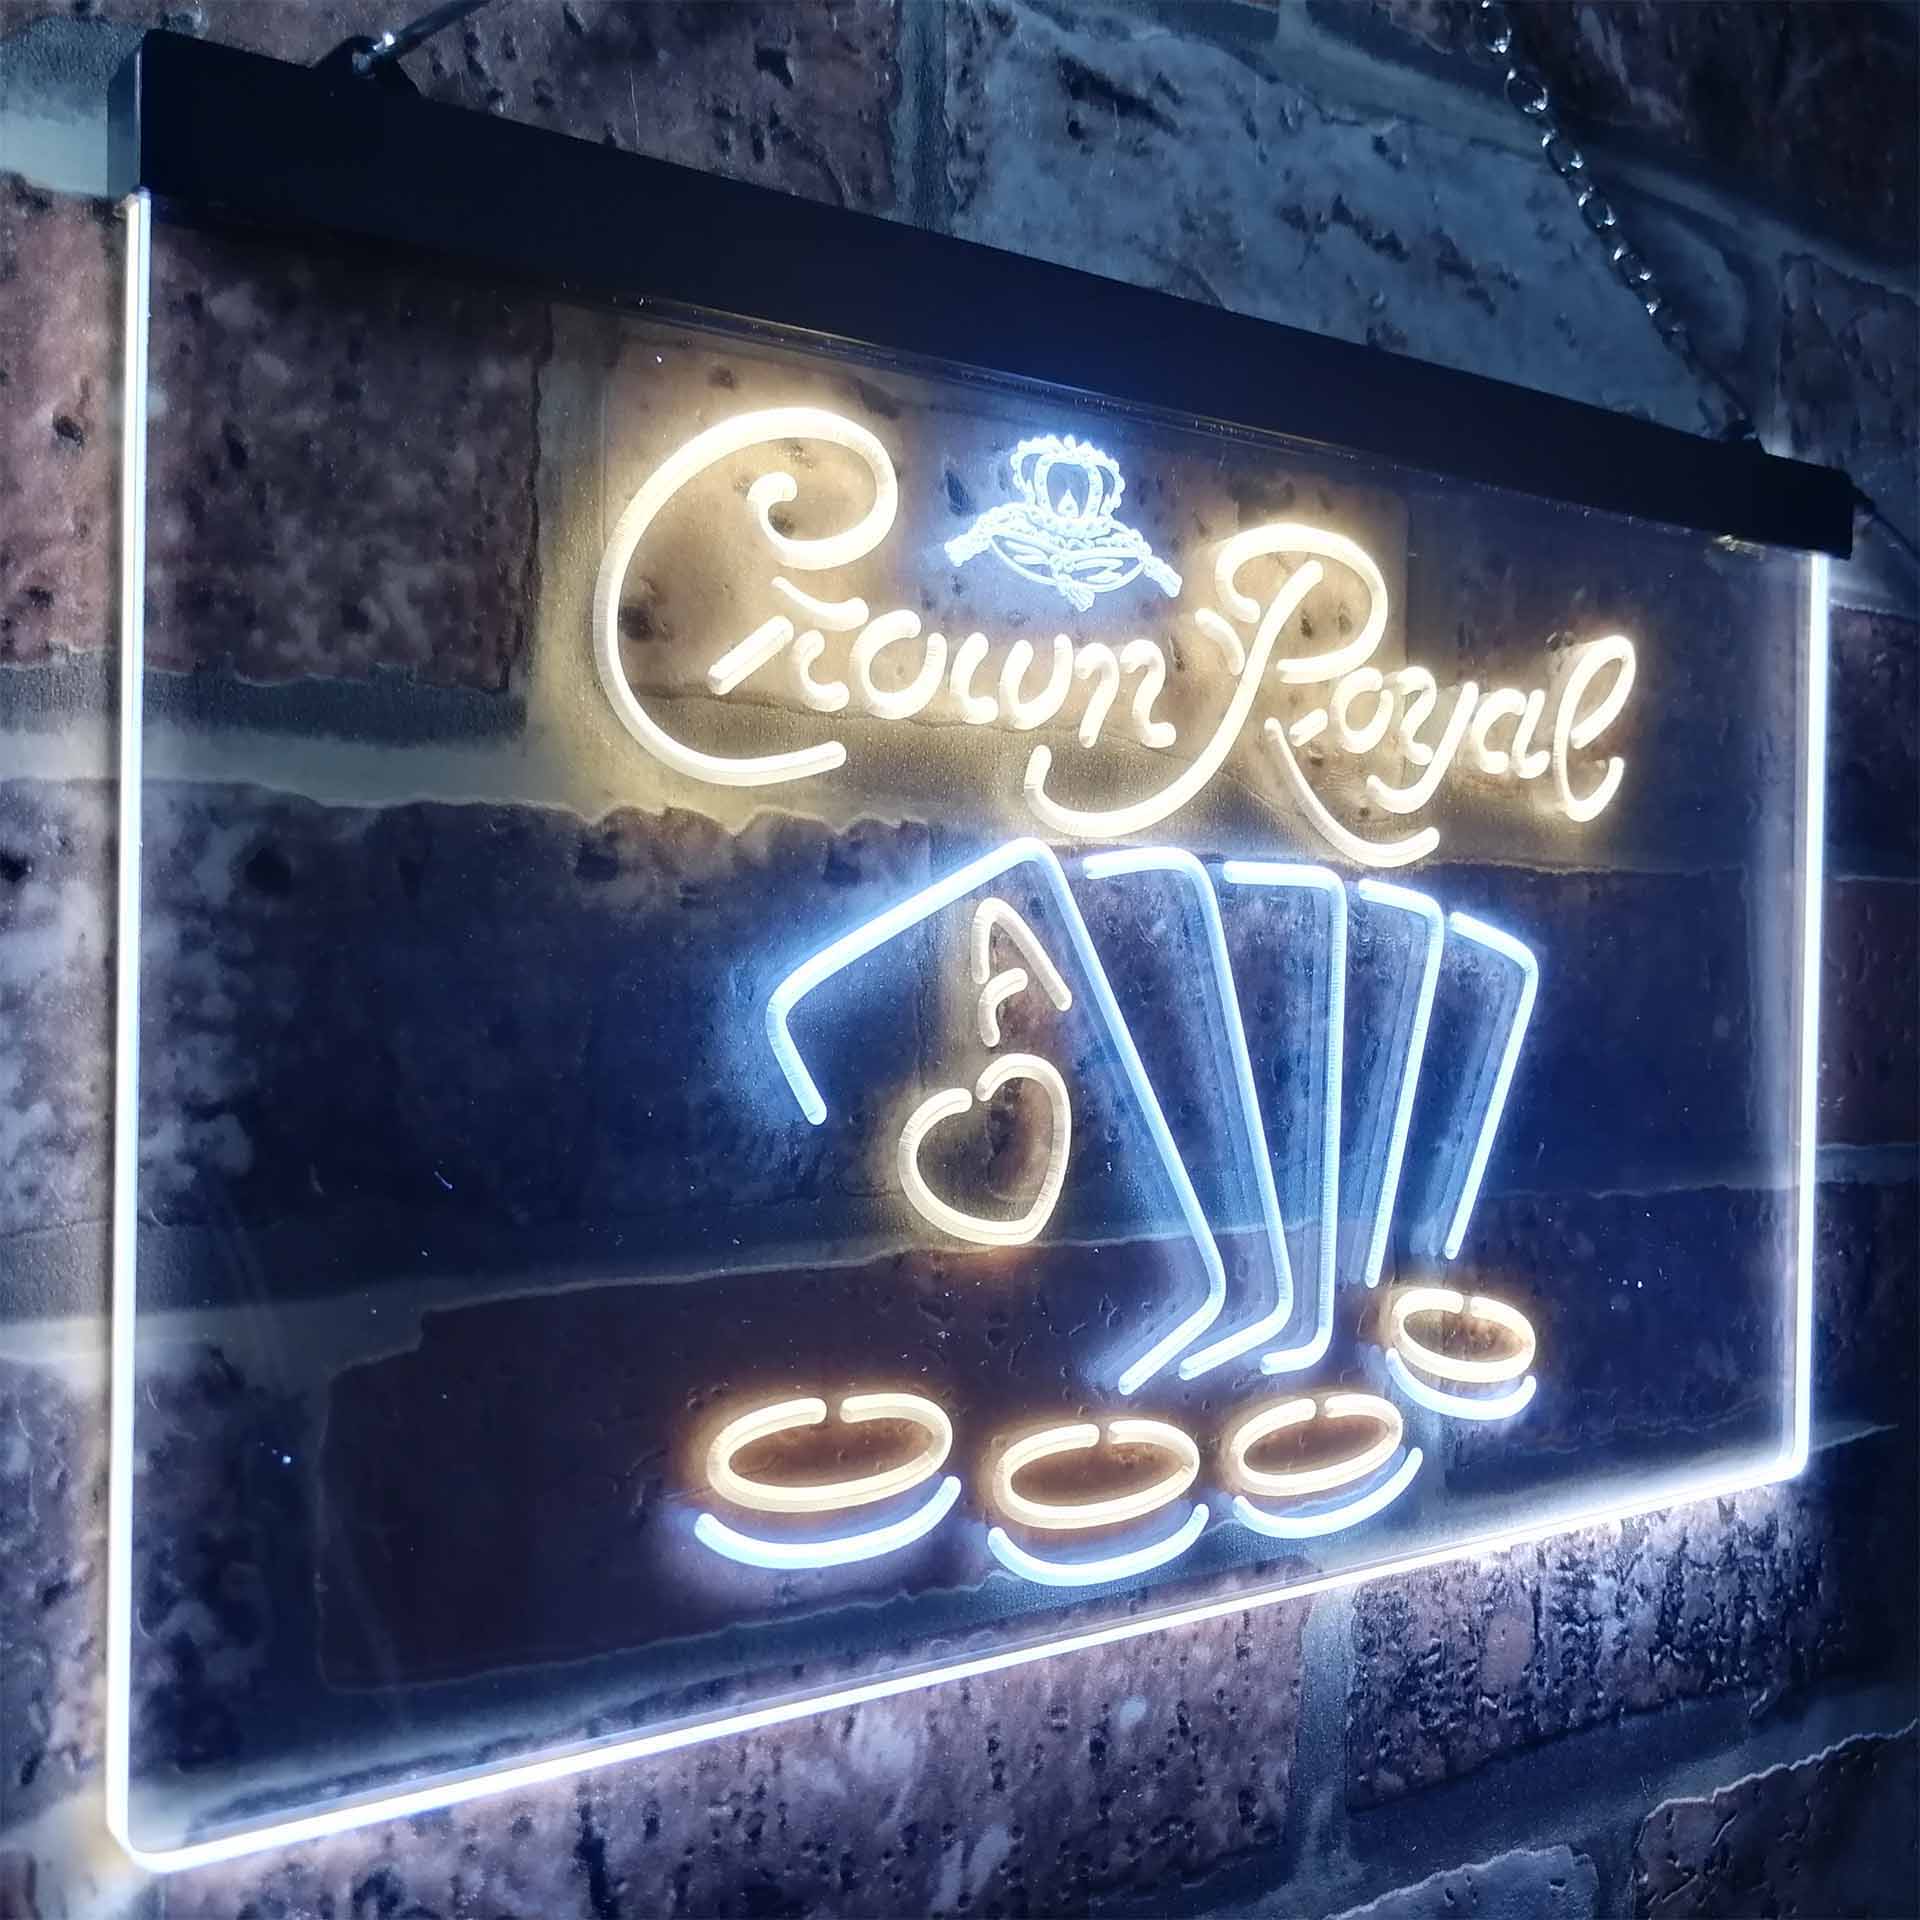 Crown Royal Casino Poker LED Neon Sign